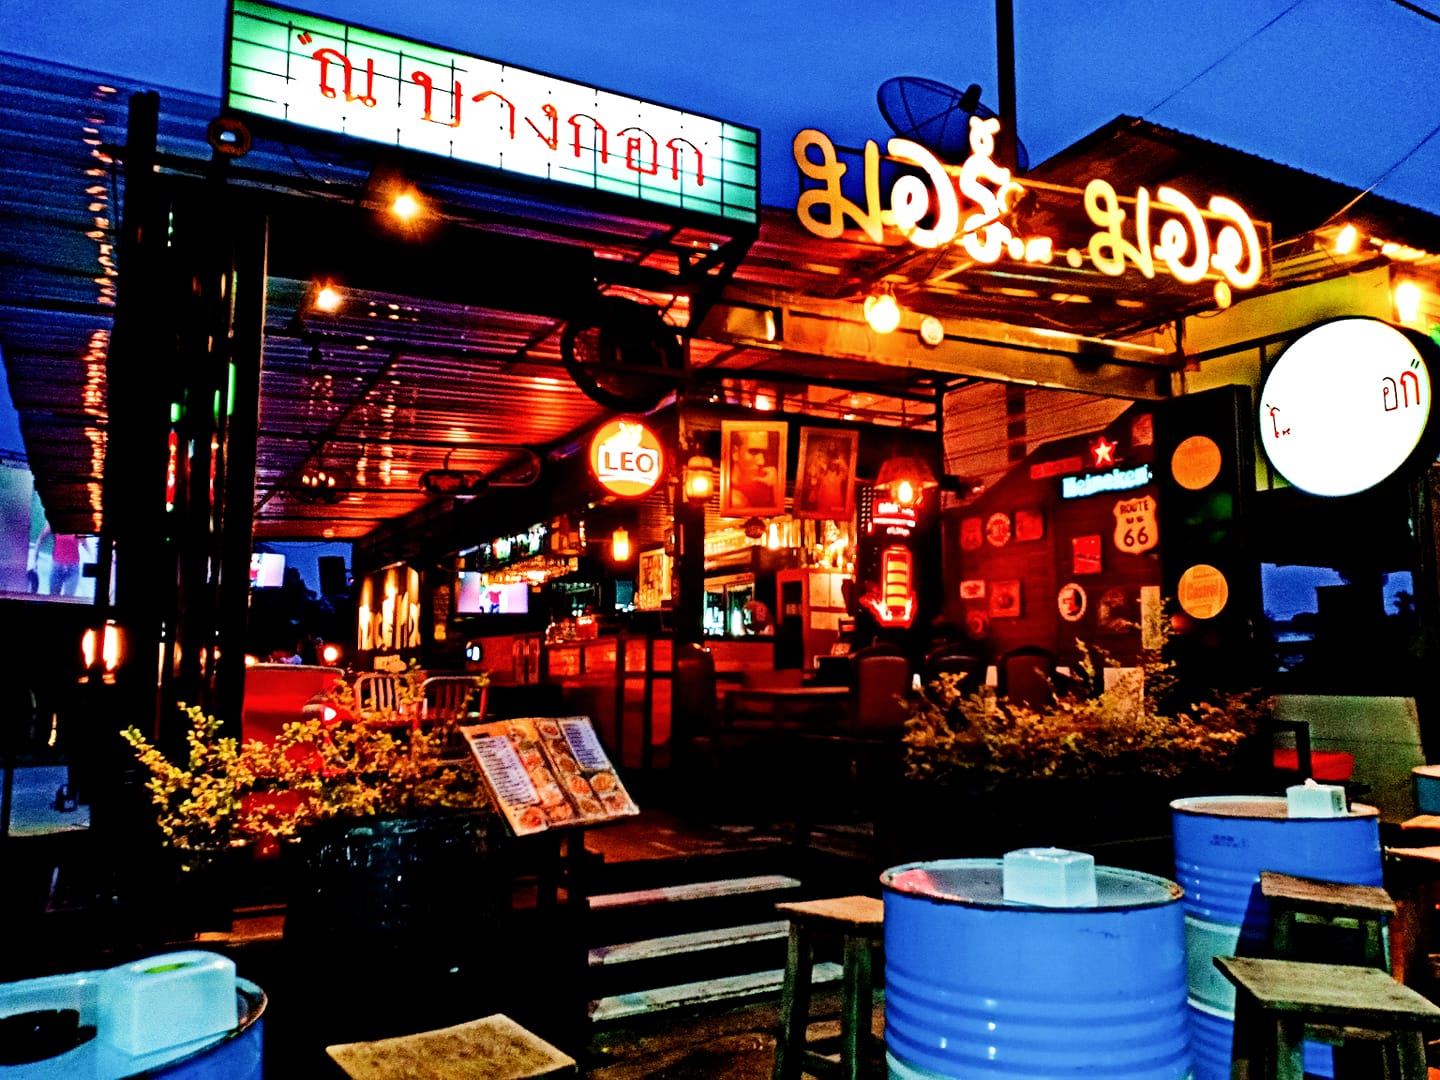 More Moo bar&restaurant (มอร์ม ออ บาร์ แอนด์ เรสเตอรองท์) : Nakhon Ratchasima (นครราชสีมา)